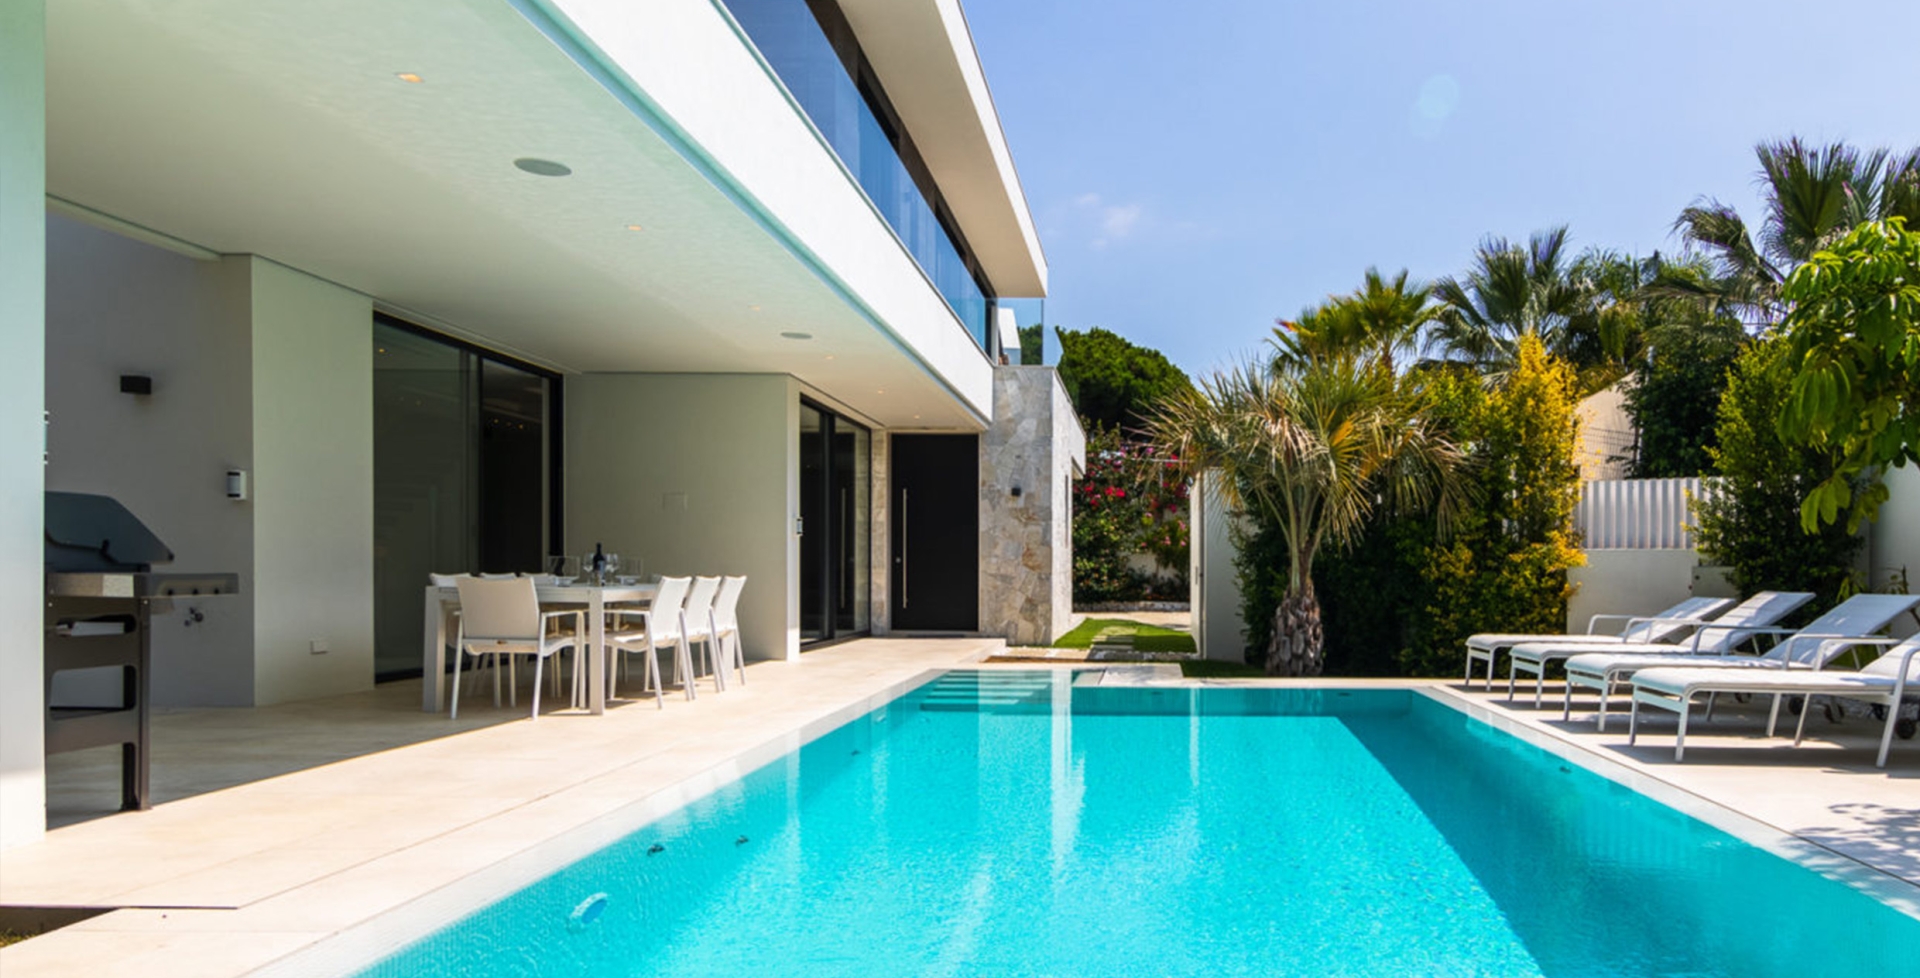 Villa G Marbella pool